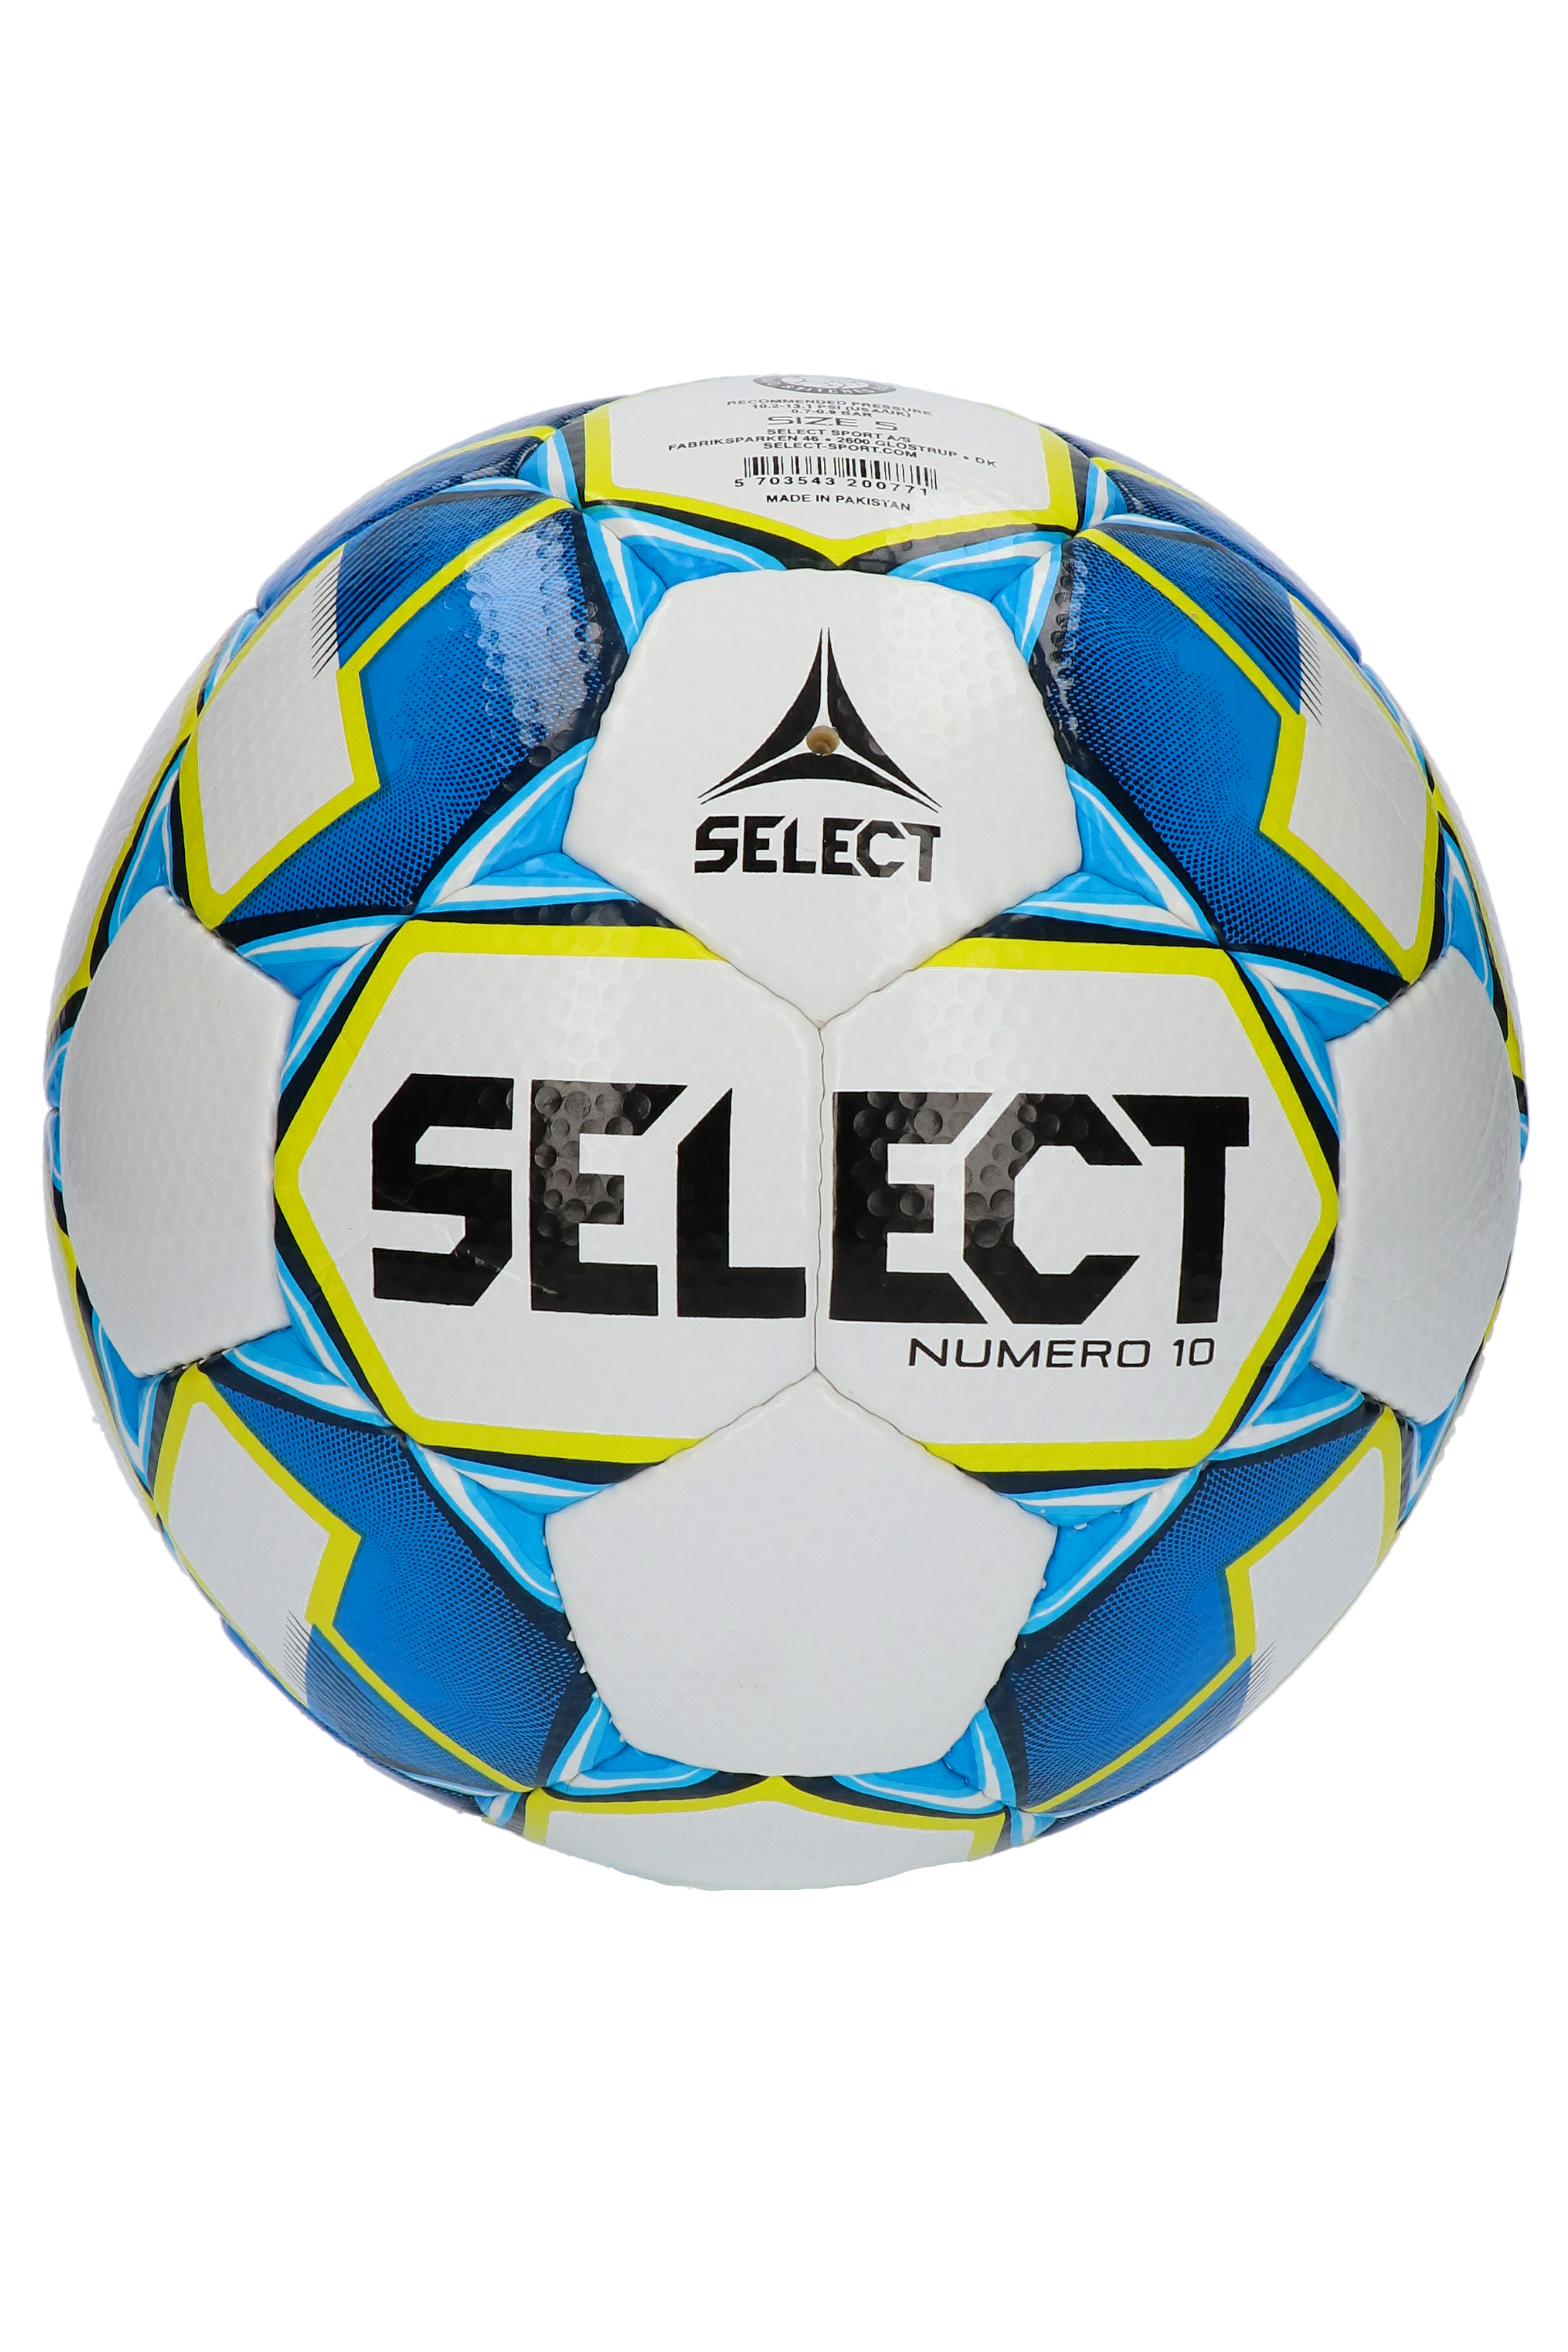 Ball Select Numero 10 2019 IMS size 5